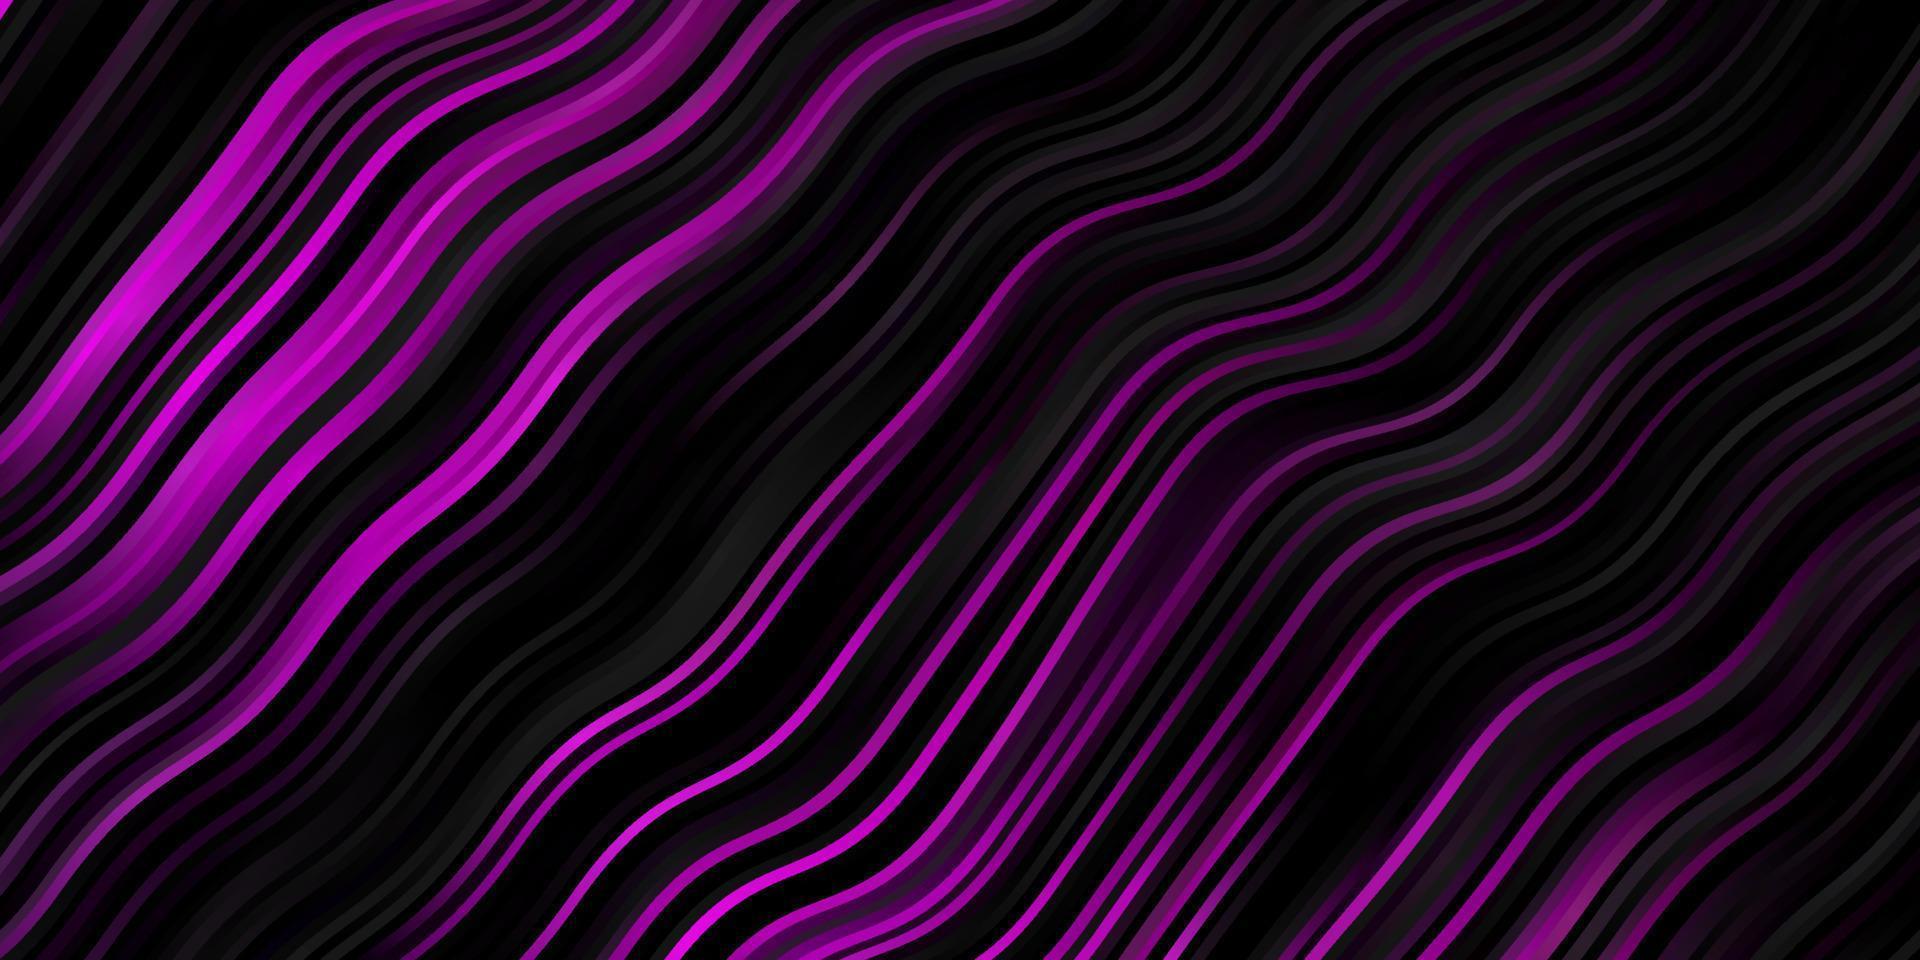 plantilla de vector de color púrpura oscuro con líneas curvas.